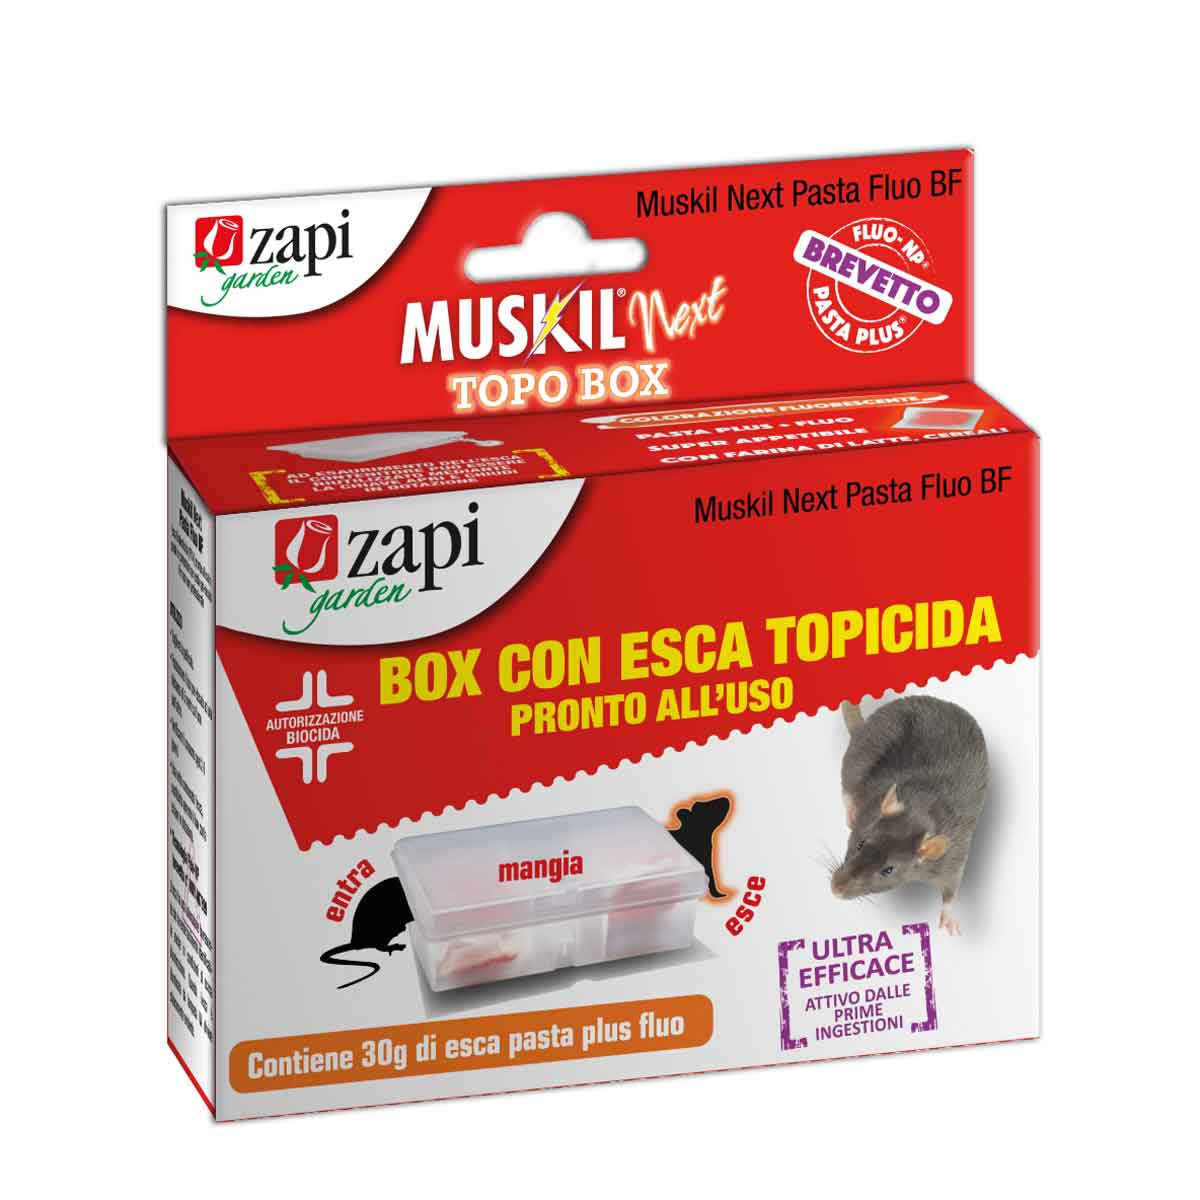 Zapi Muskil® Next Pasta Fluo BF Topo Box